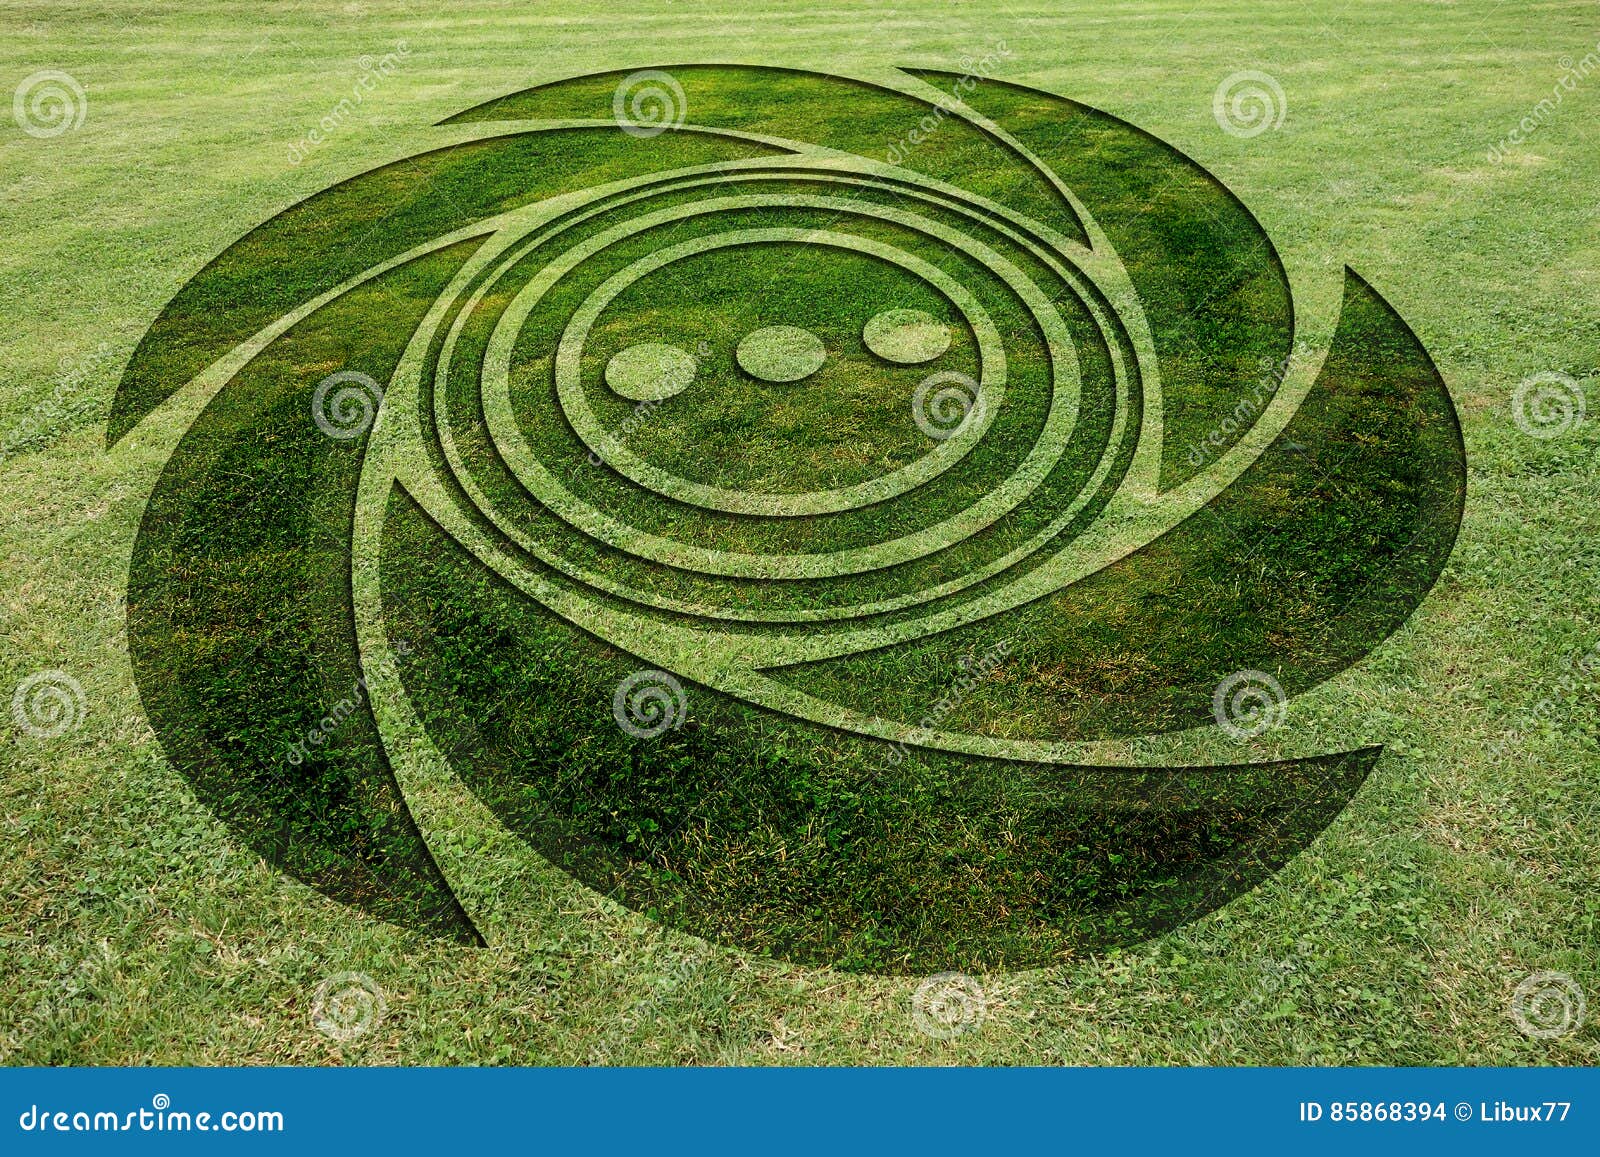 concentric spiral circles fake crop circle meadow